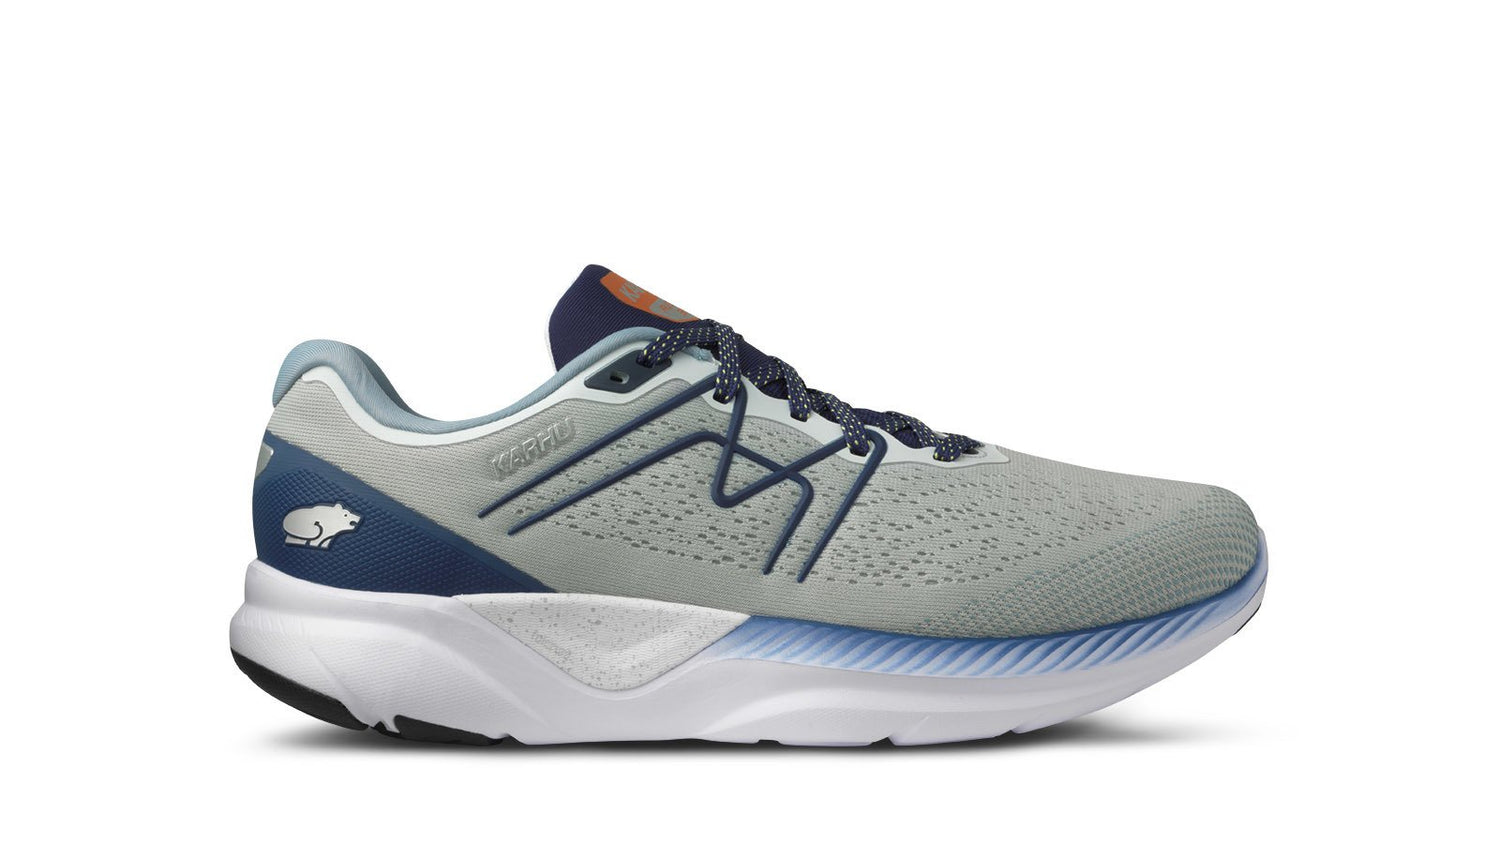 Men's Karhu Fusion 3.5 blue running shoe